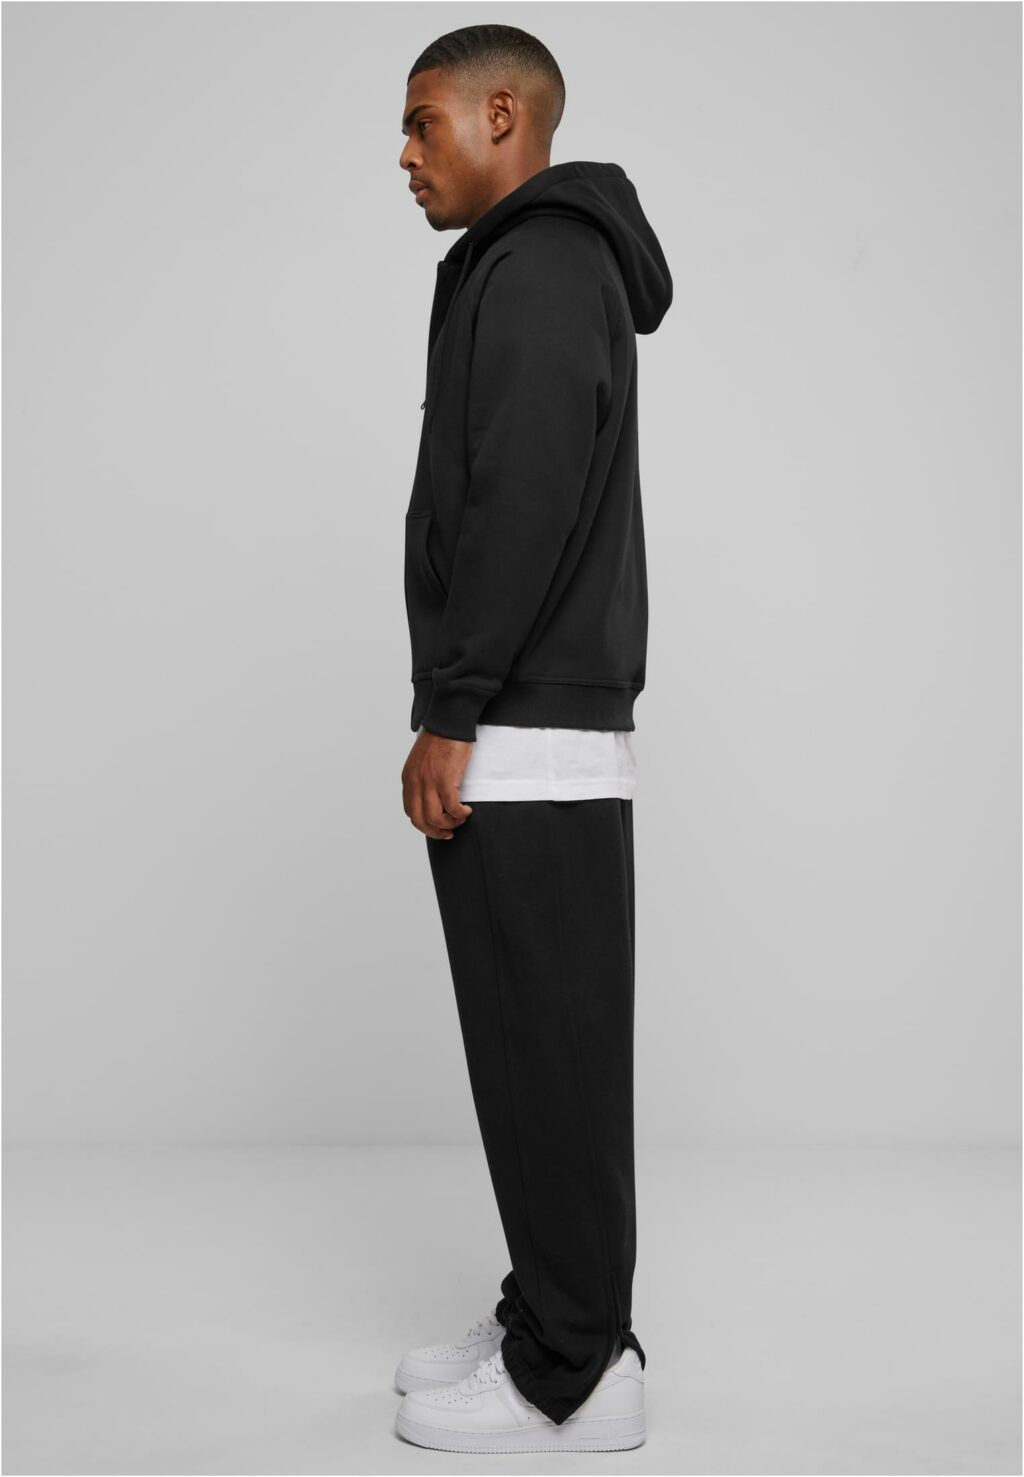 Urban Classics Blank Suit black TB001